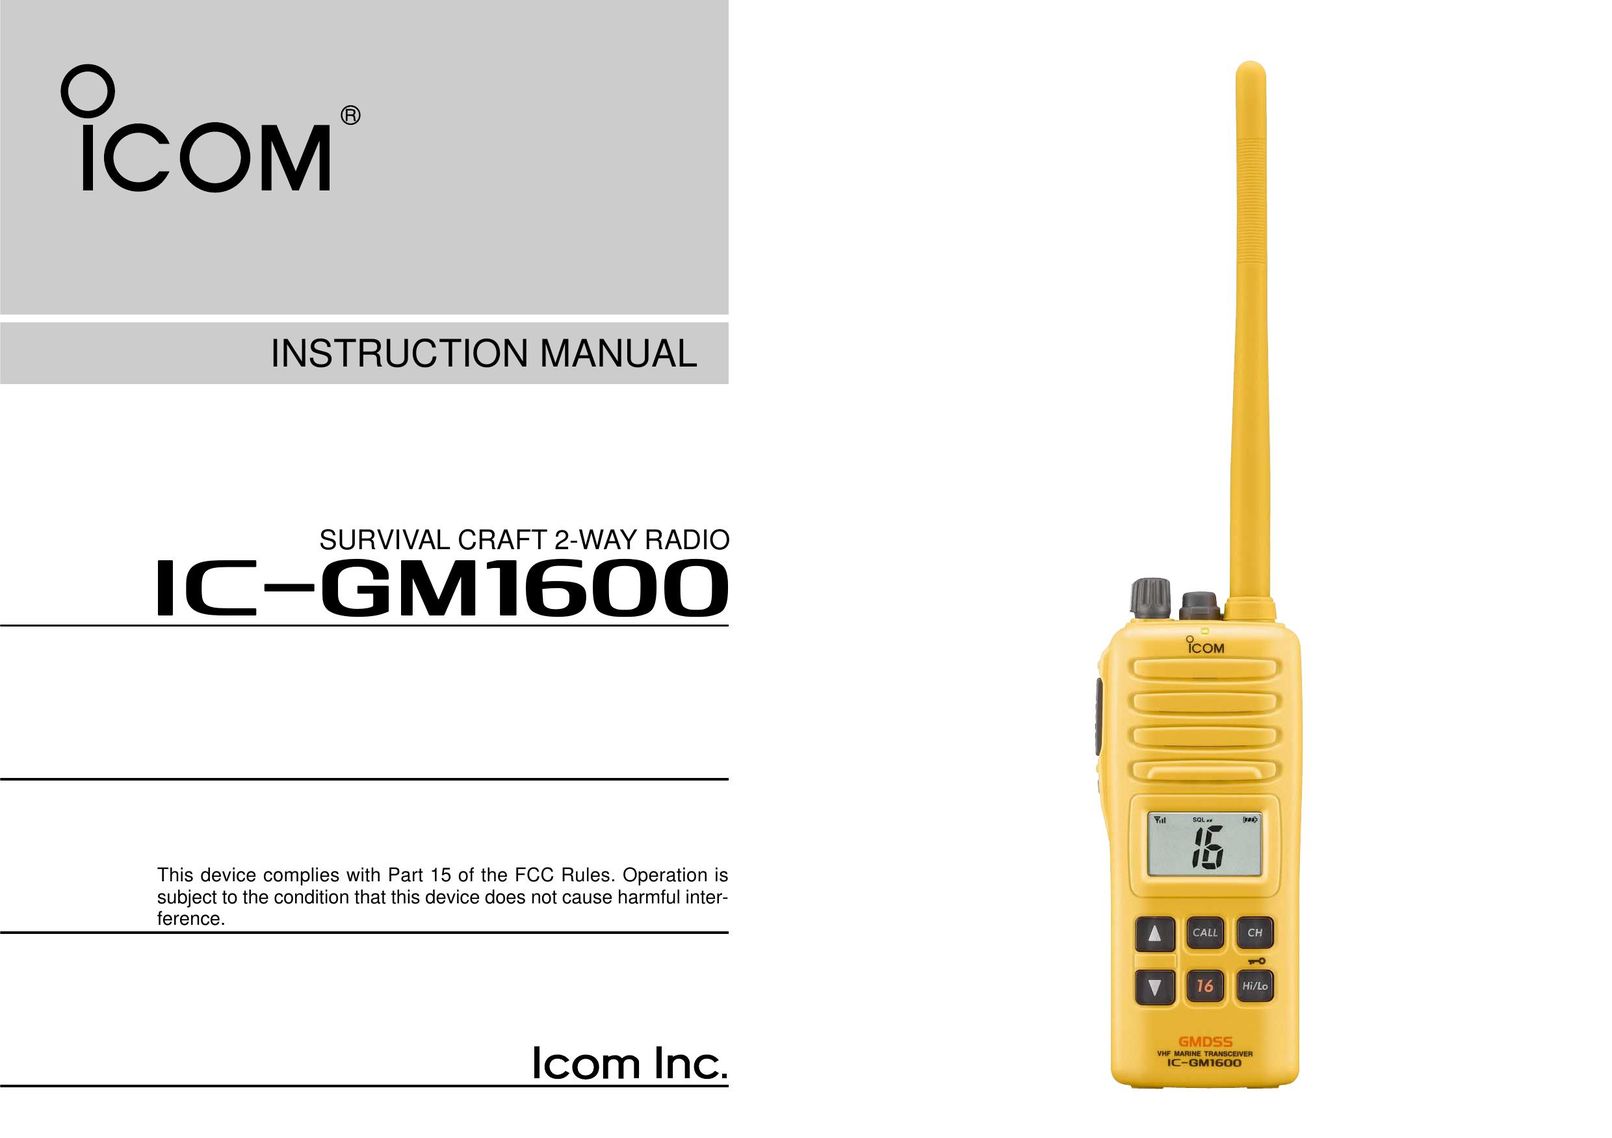 Icom IGM1600 Two-Way Radio User Manual